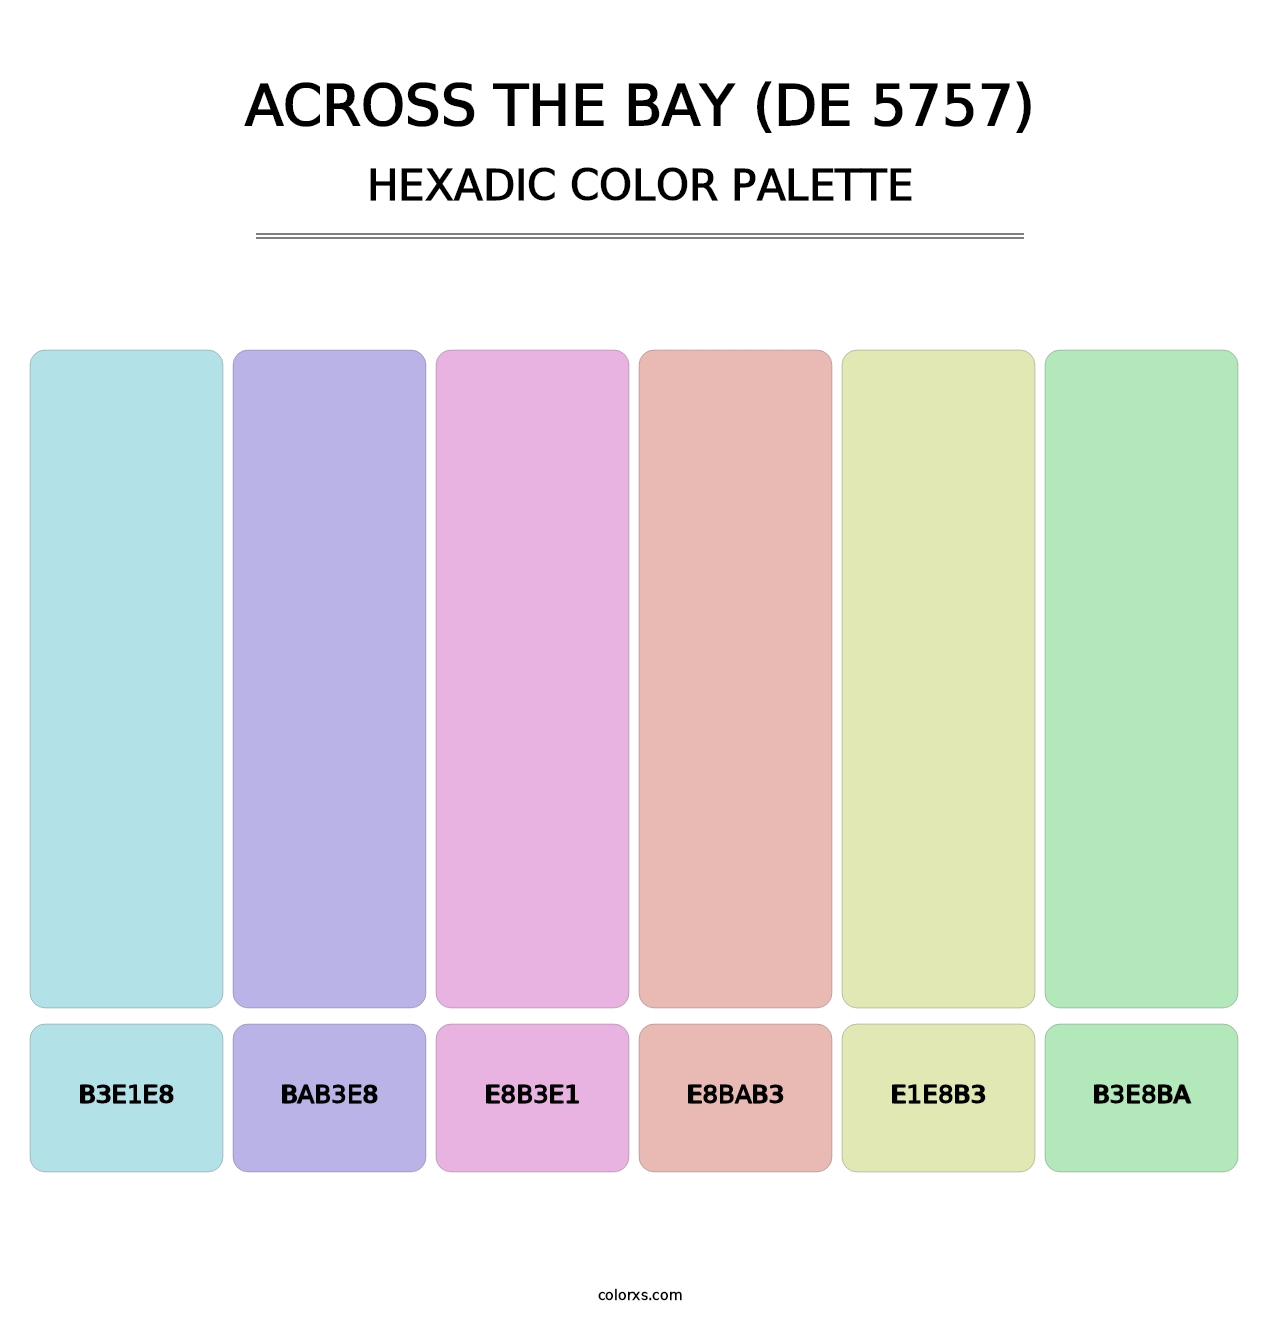 Across the Bay (DE 5757) - Hexadic Color Palette